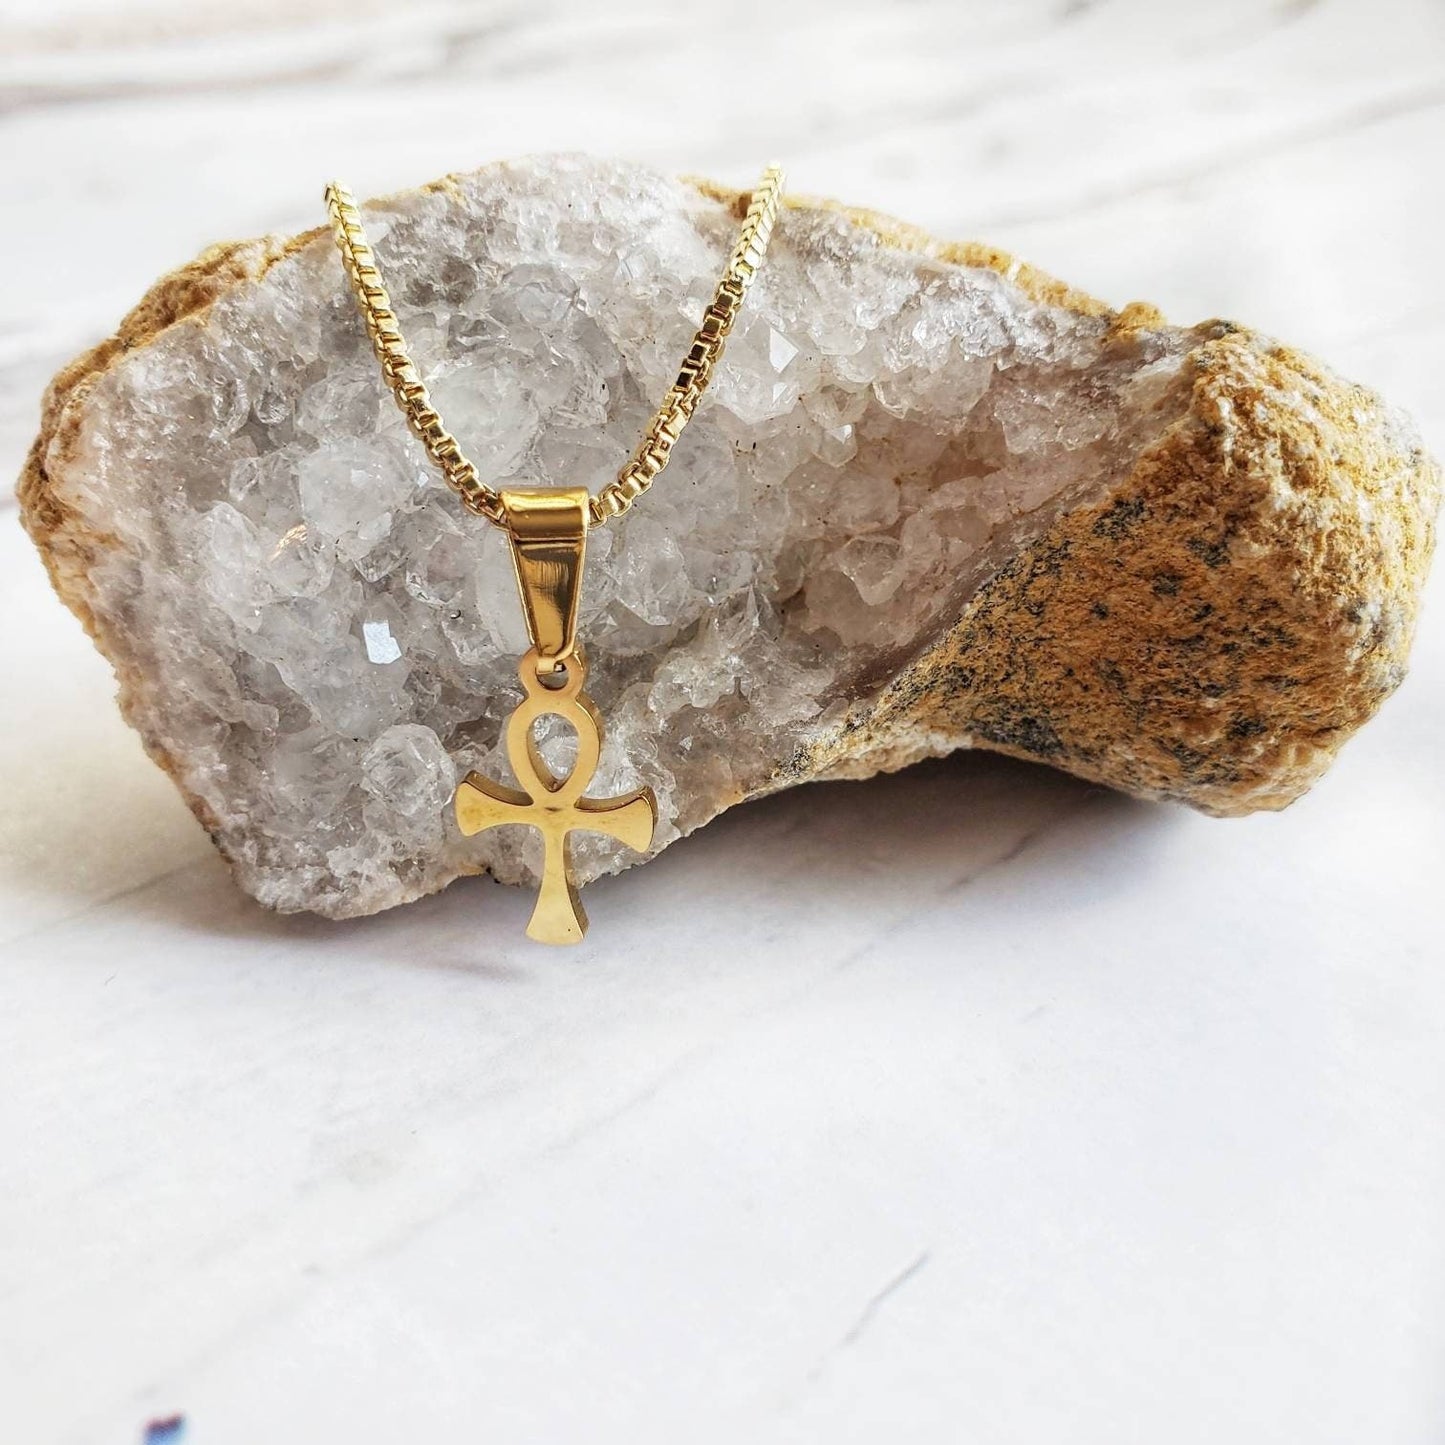 ANKH | 14K Gold Box Chain Necklace | Delicate Ankh Pendant Necklace | Couples Necklace | Fertility Goddess Pendant | Egyptian Cross Jewelry